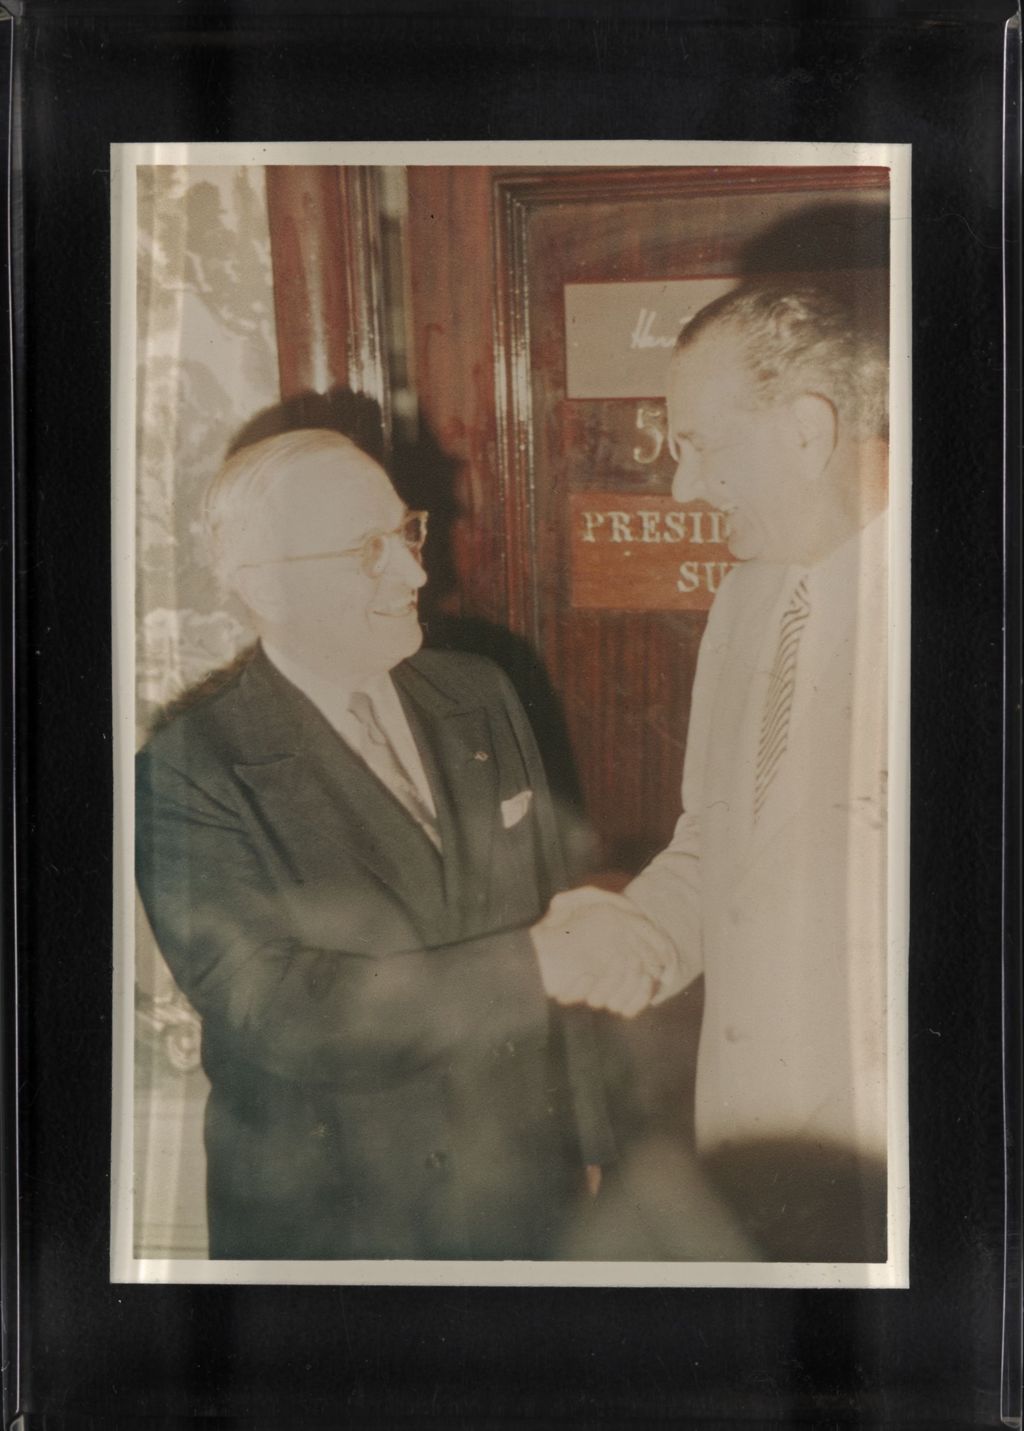 Miniature of Harry Truman and Lyndon B. Johnson